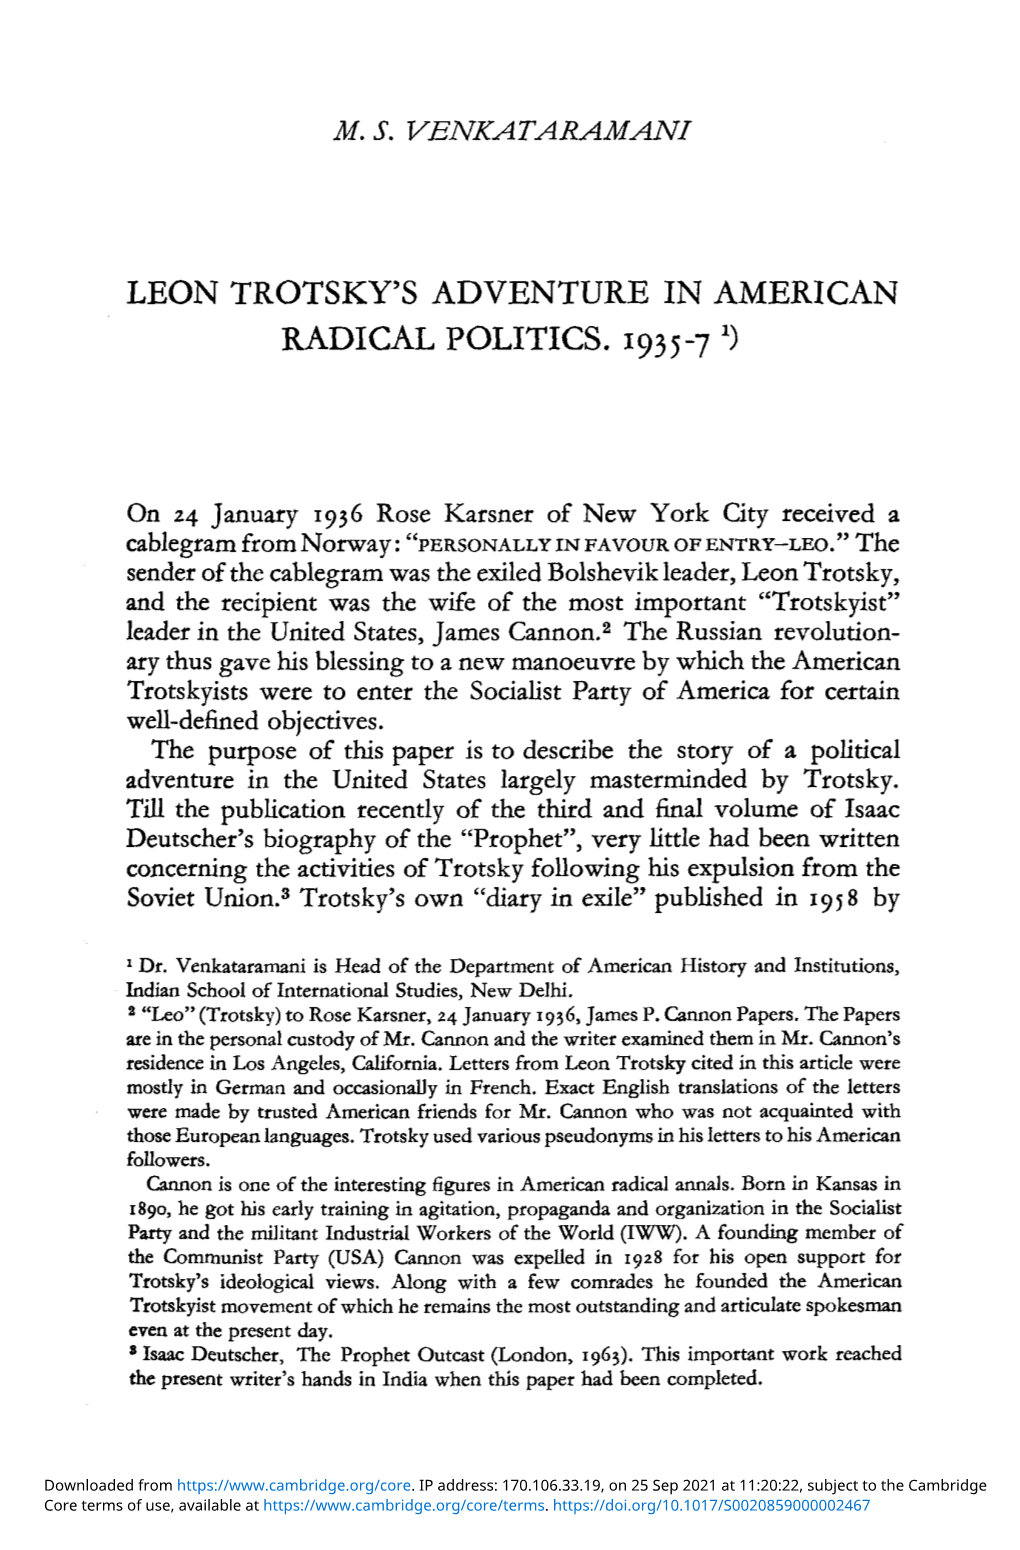 Leon Trotsky's Adventure in American Radical Politics. 1935–1937